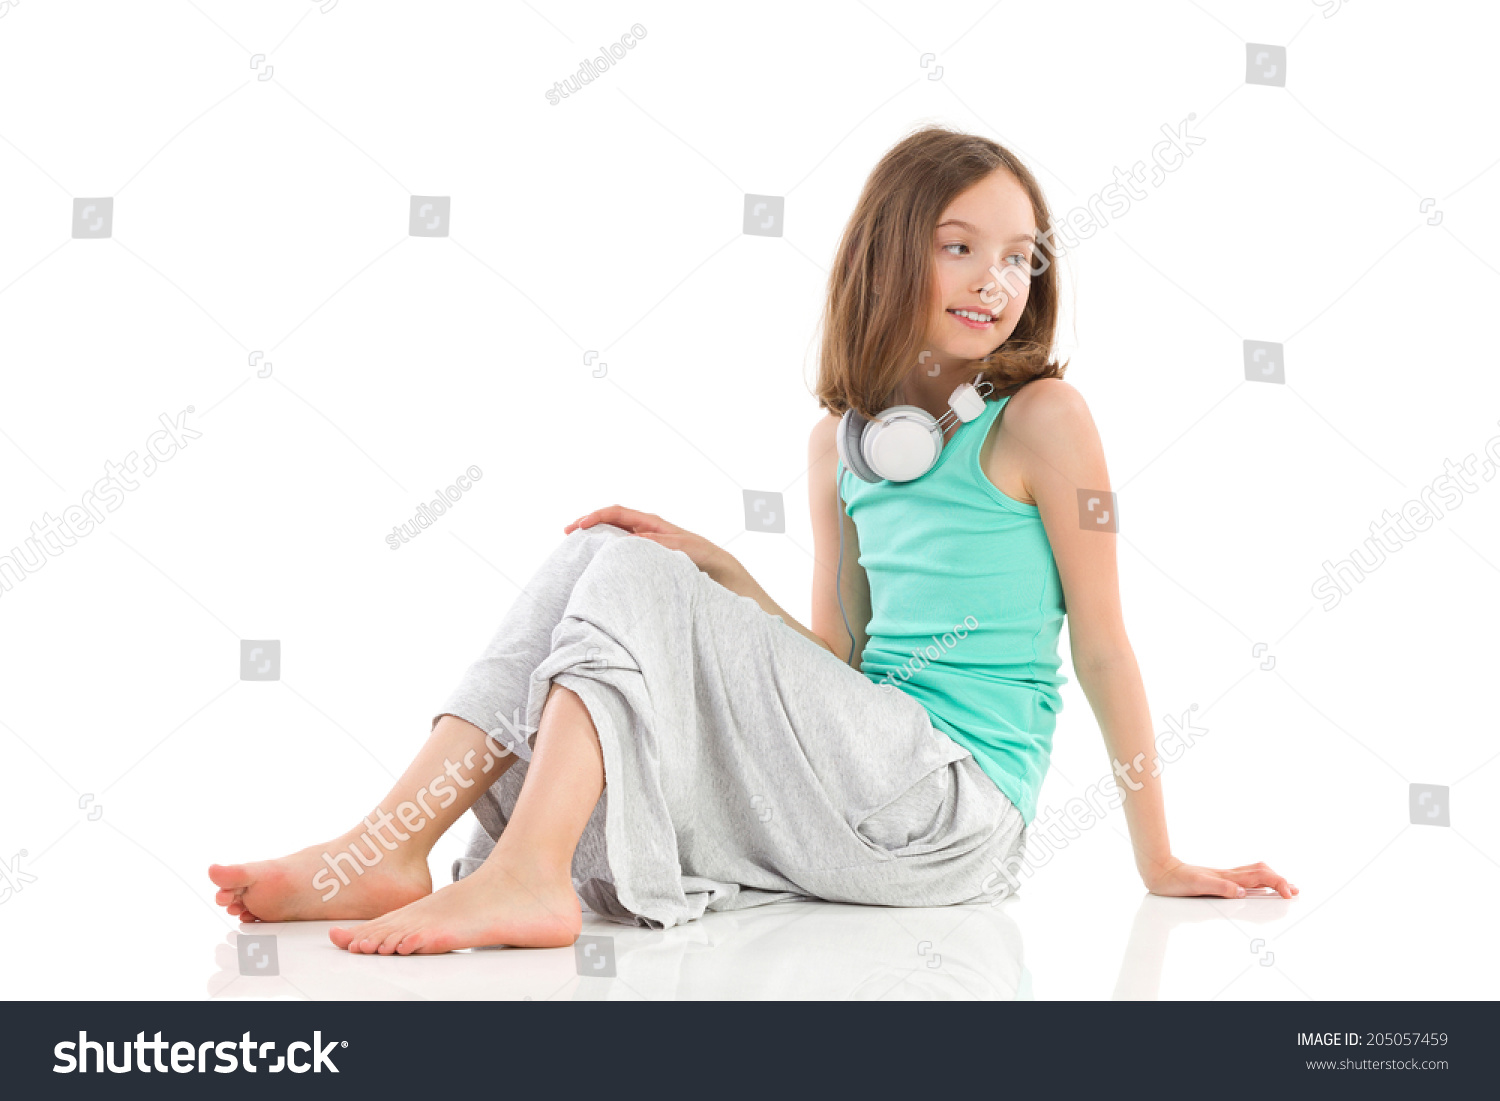 Девочка подросток сидит на полу